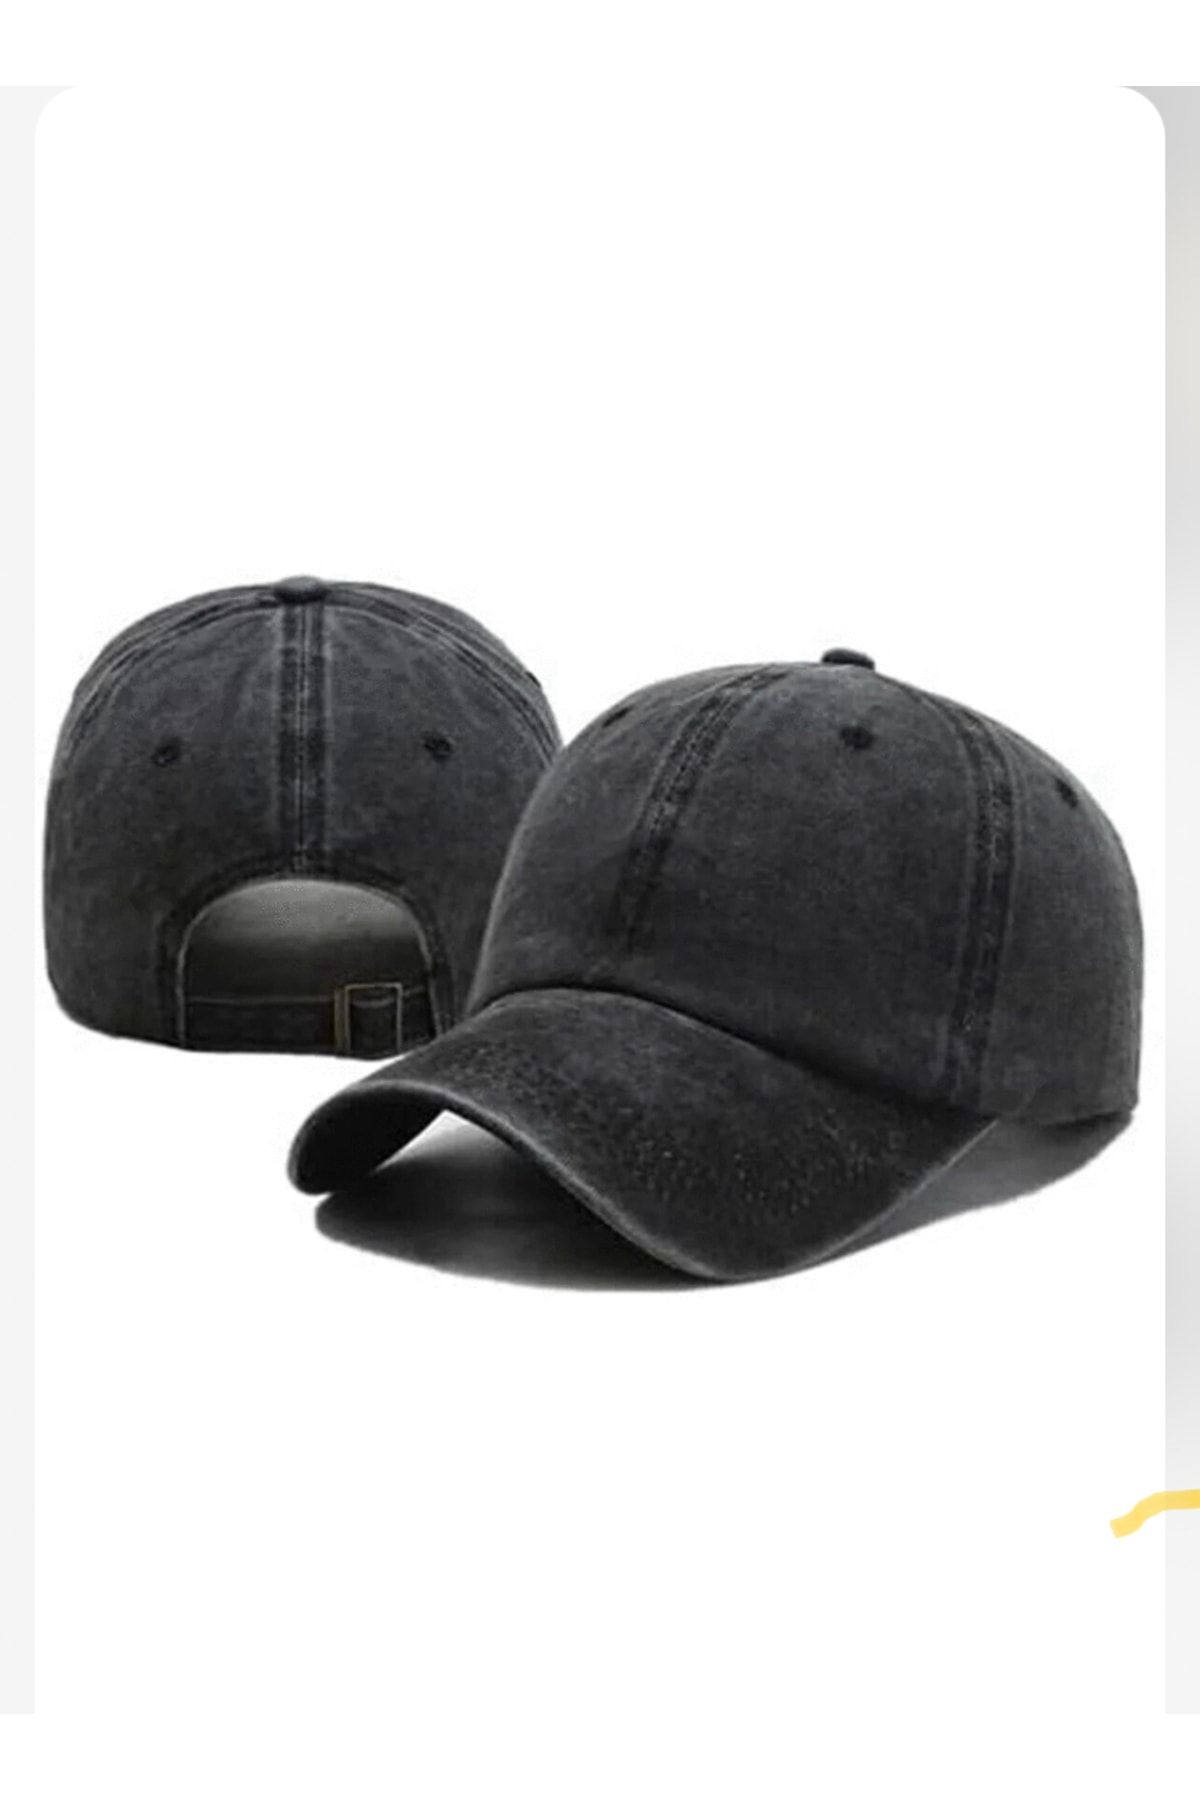 3D Düz Renk Cap 2020 Yeni Trend Unisex Şapka